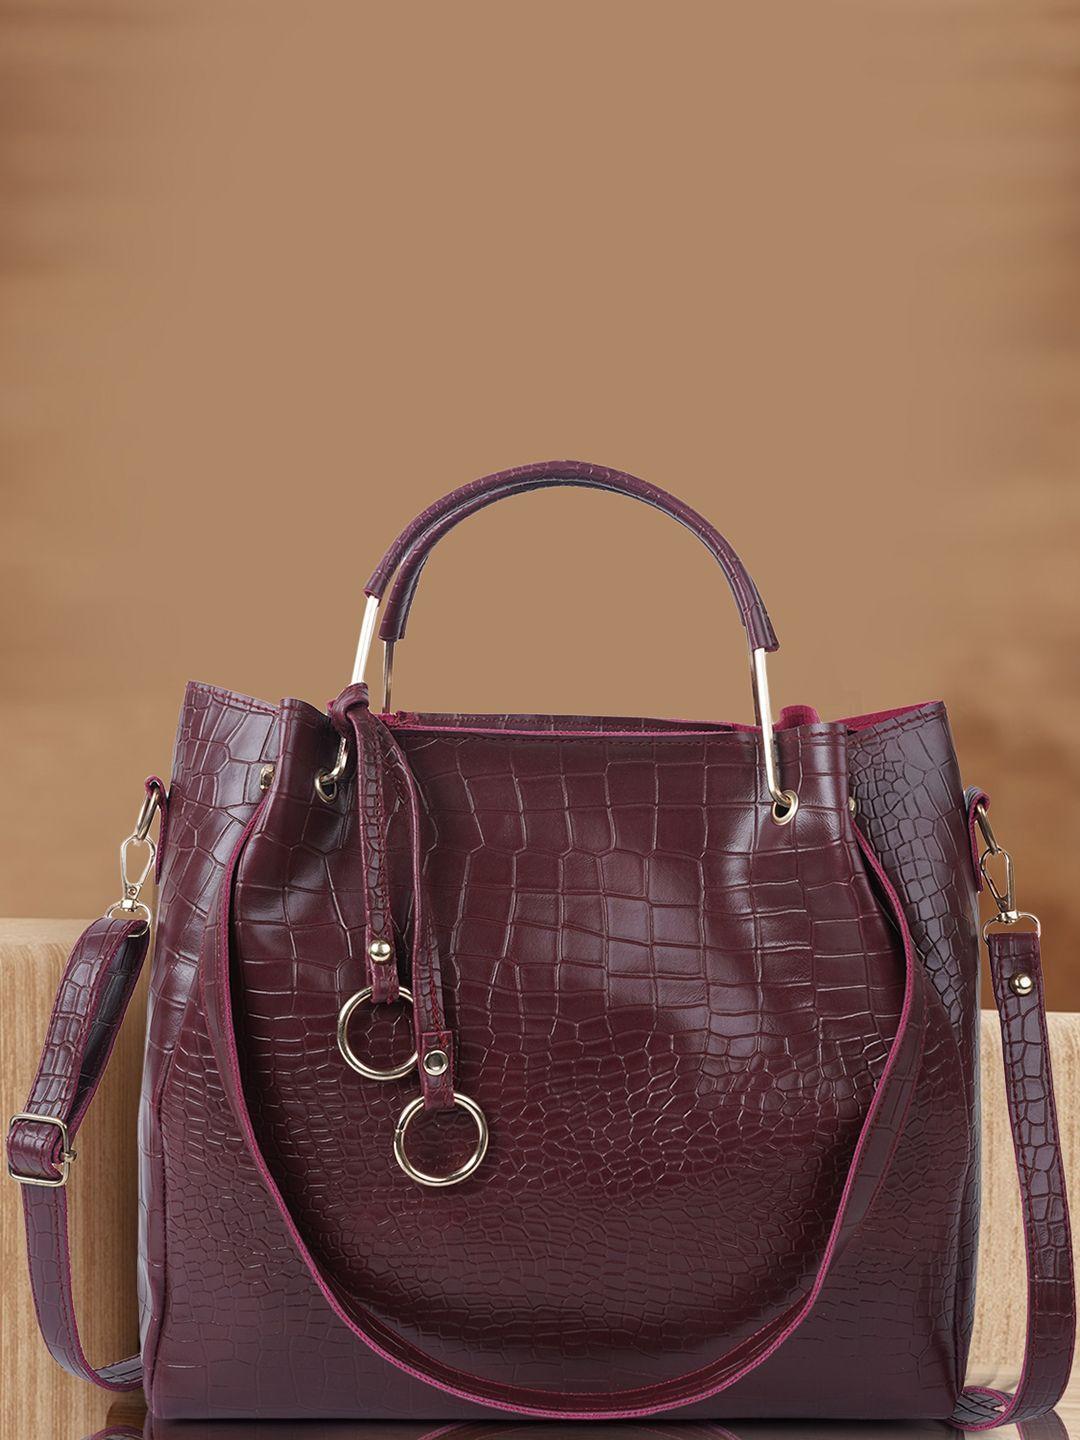 dressberry-maroon-textured-structured-handheld-bag-with-tasselled